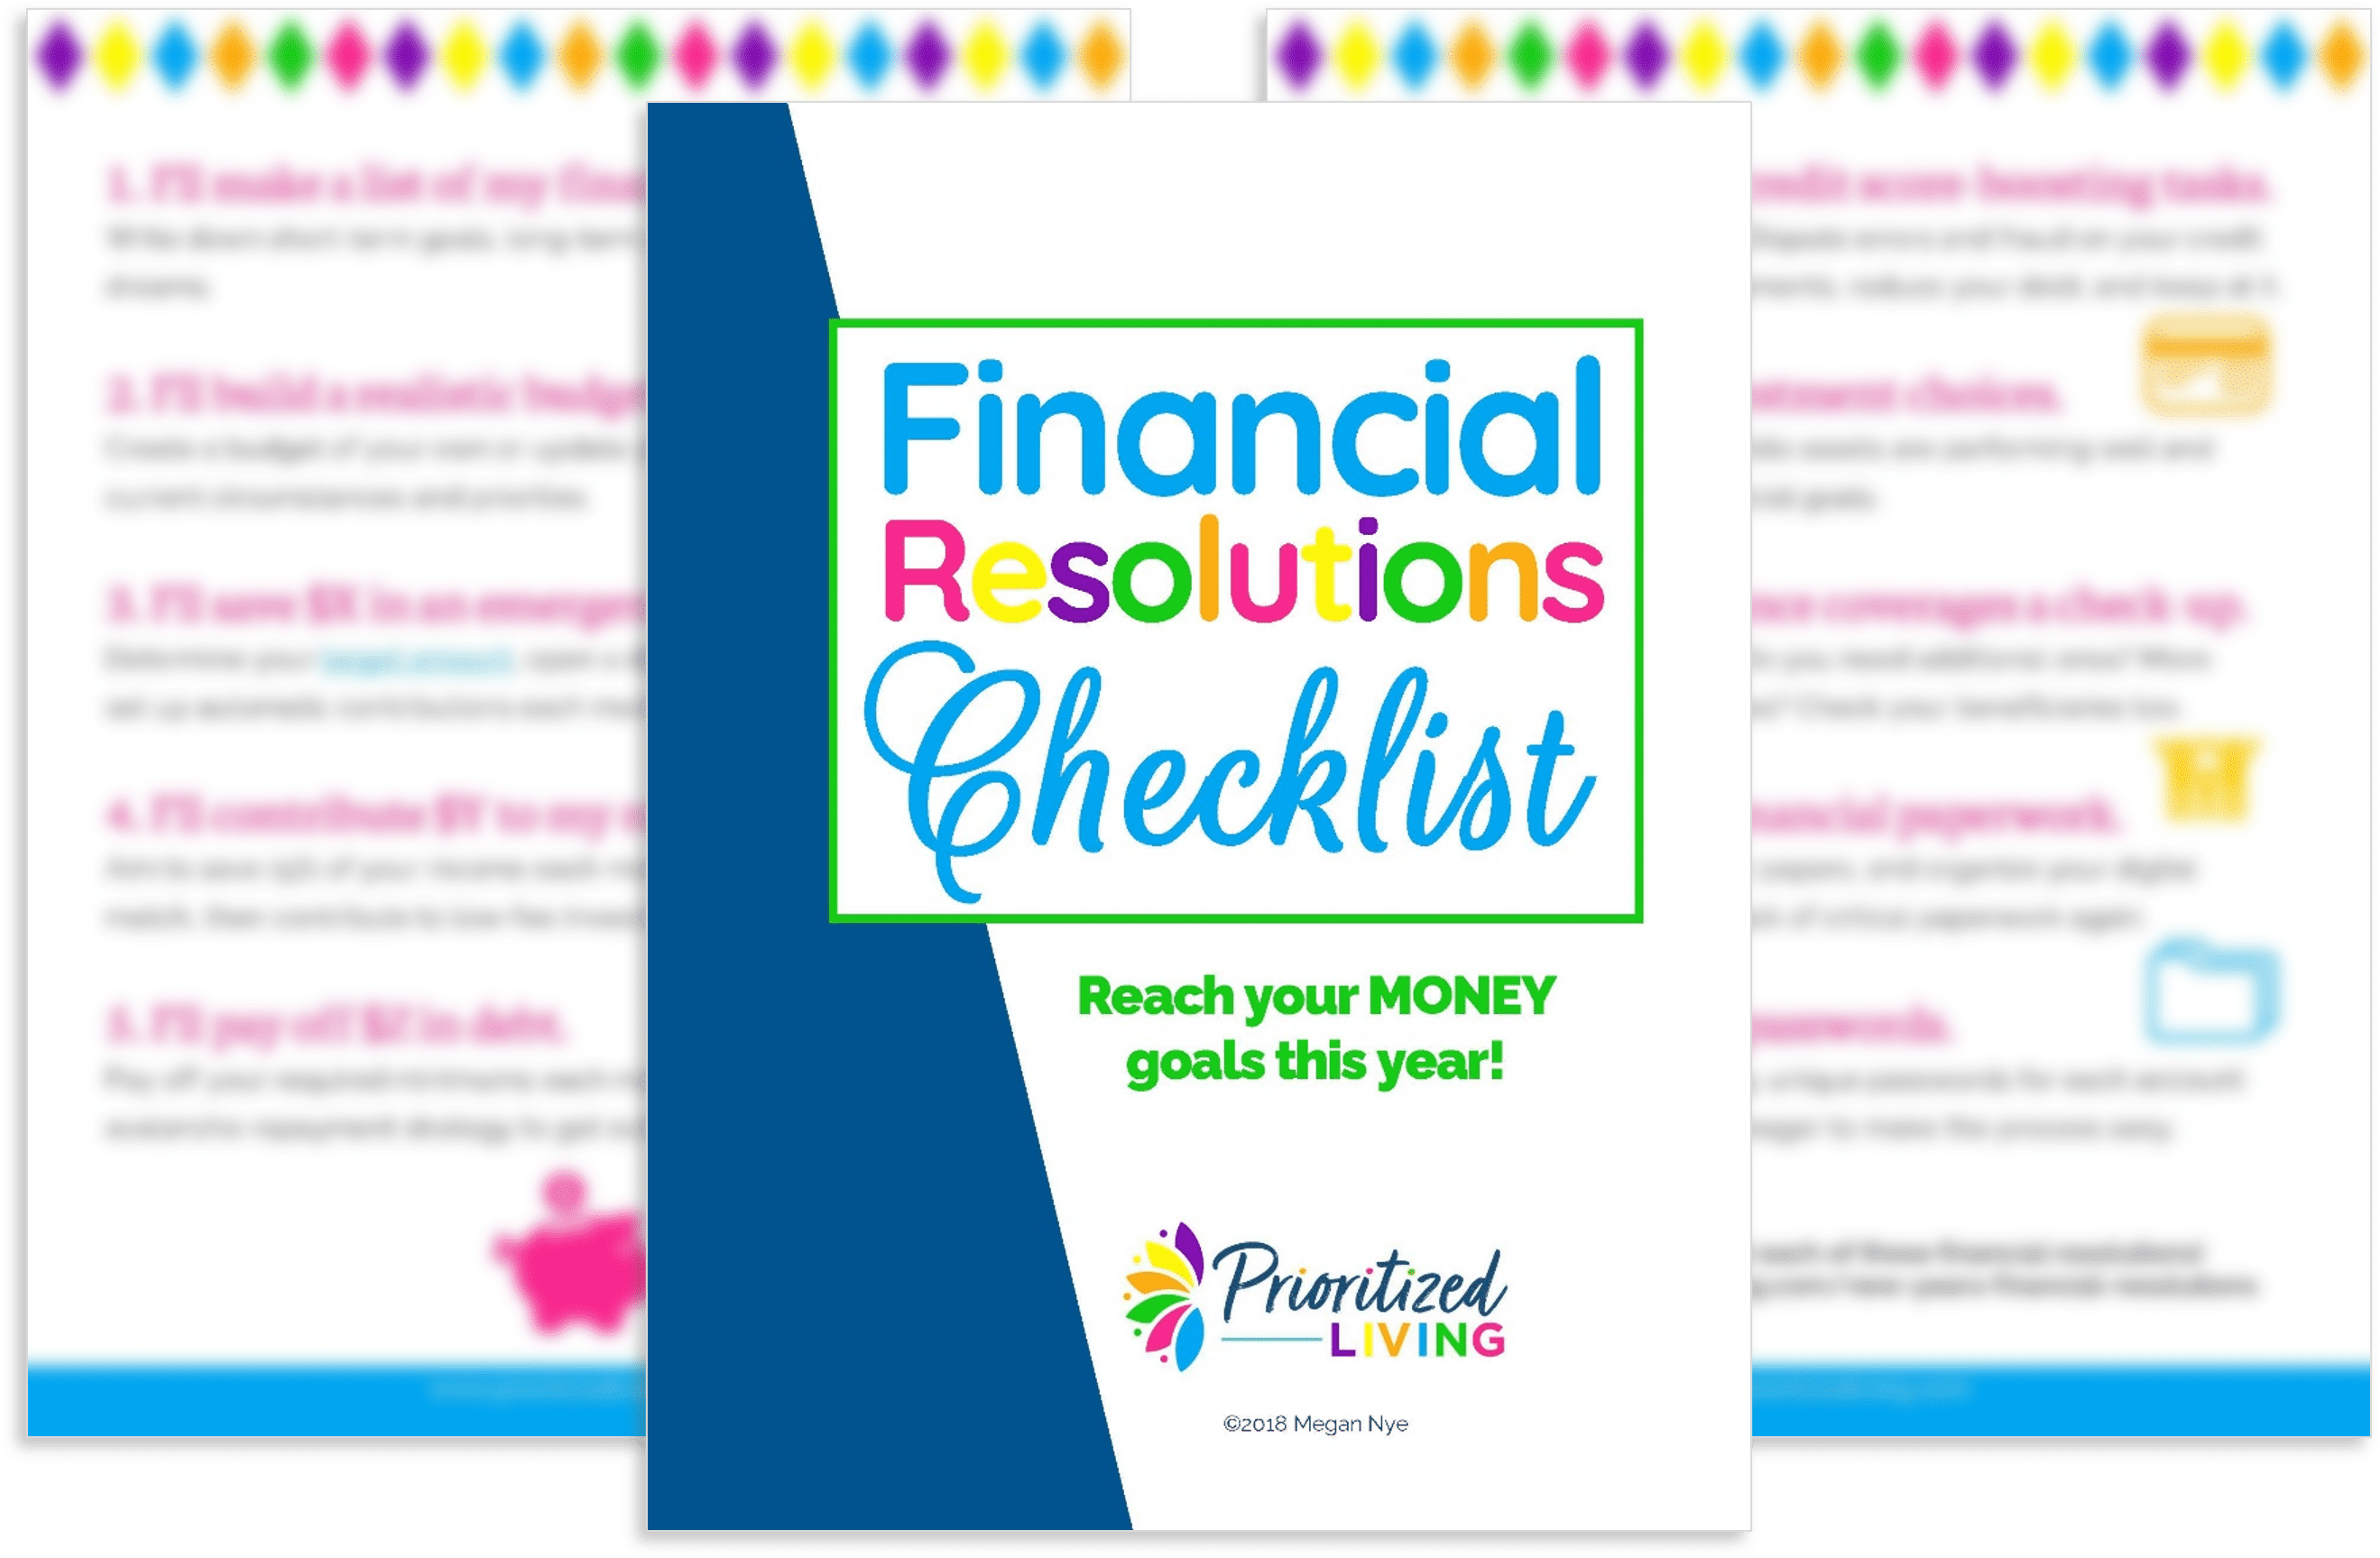 Financial Resolutions Checklist download